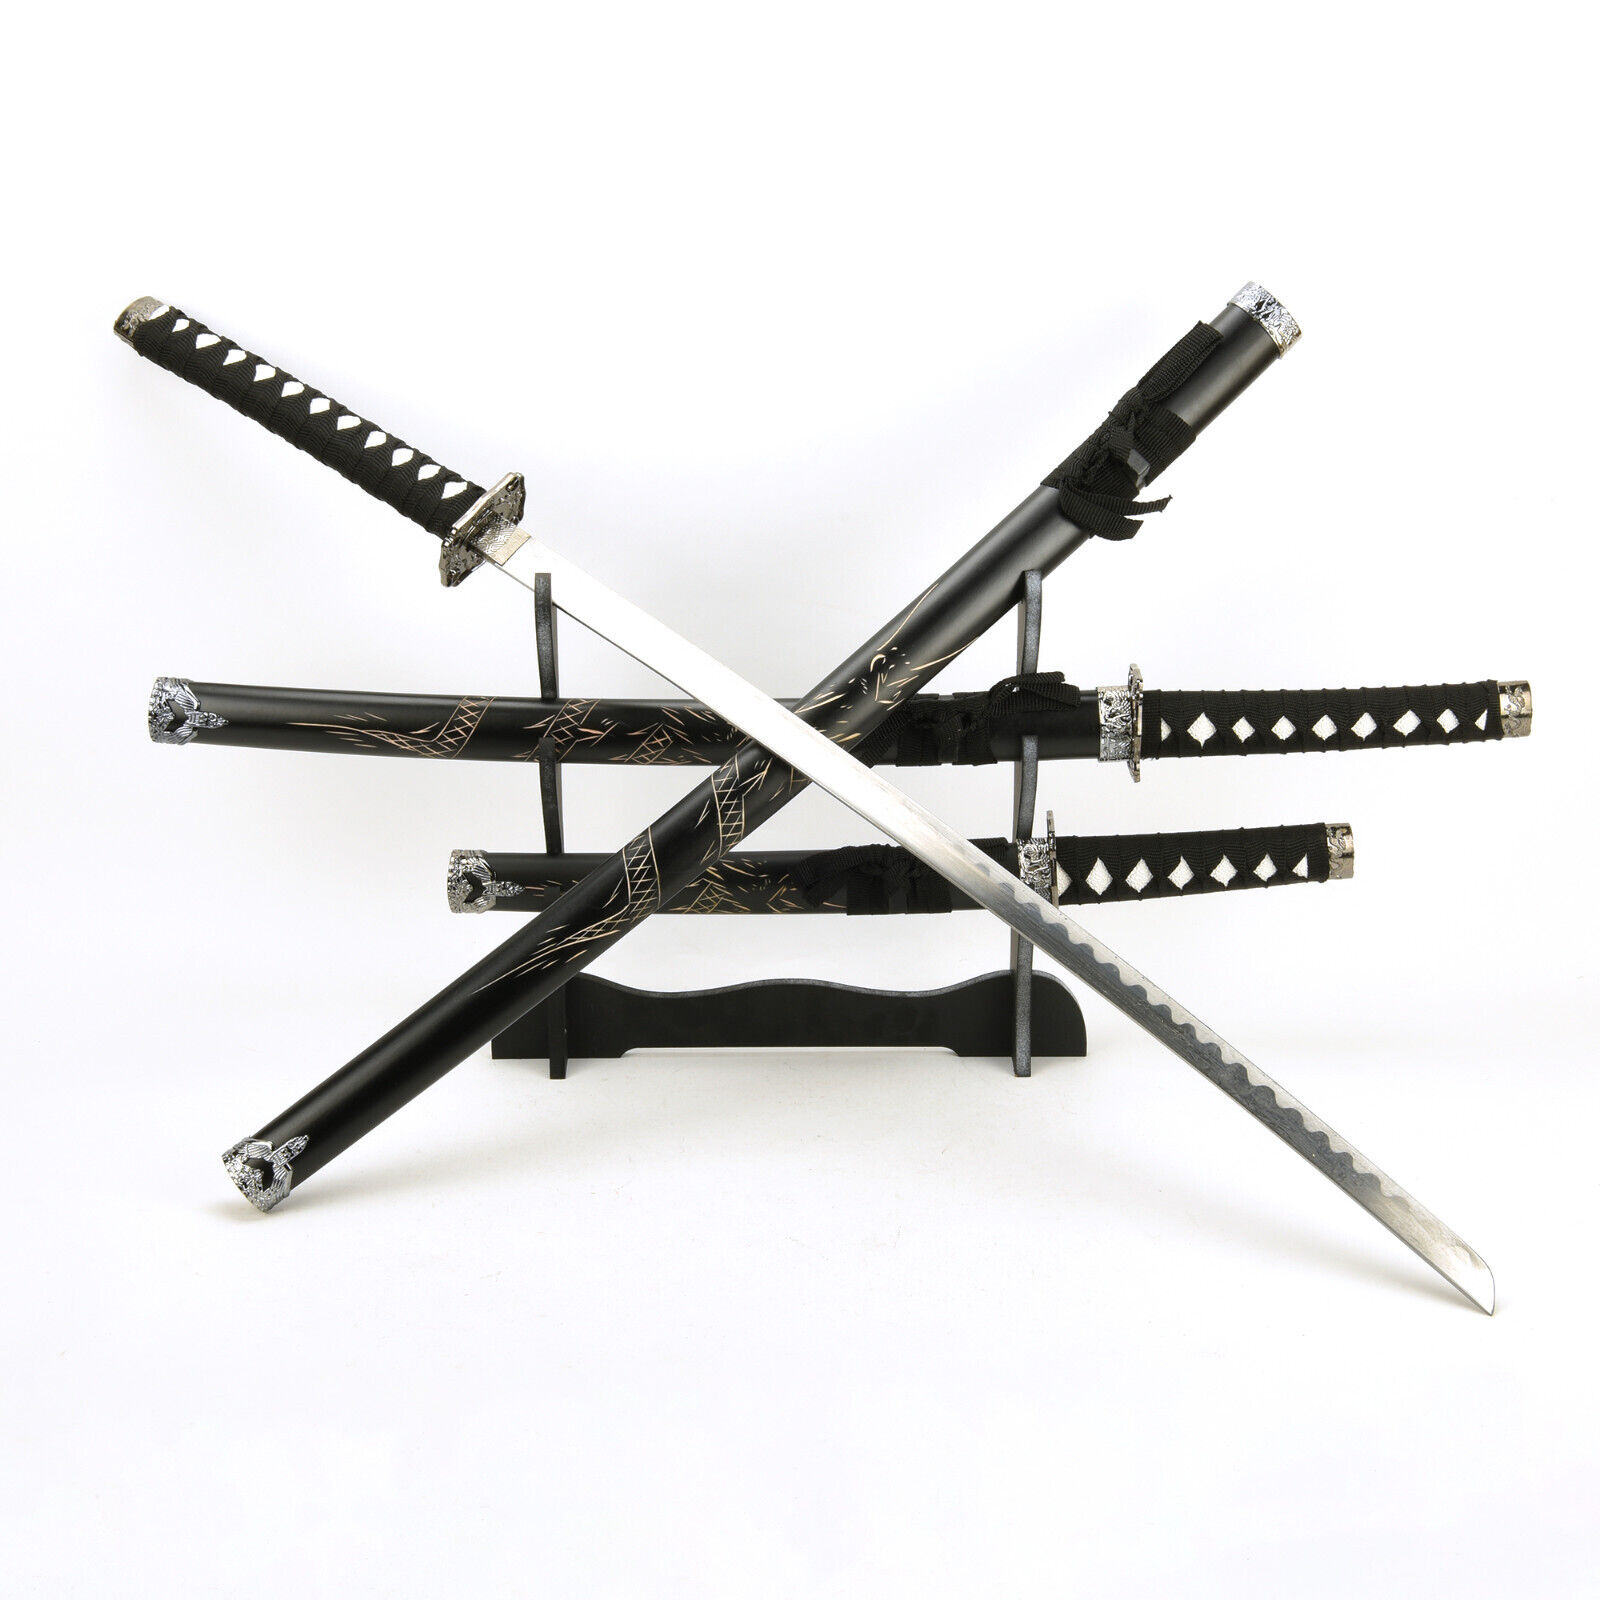 3 Piece Black Dragon Japanese Katana Samurai Swords Set with Display Stand